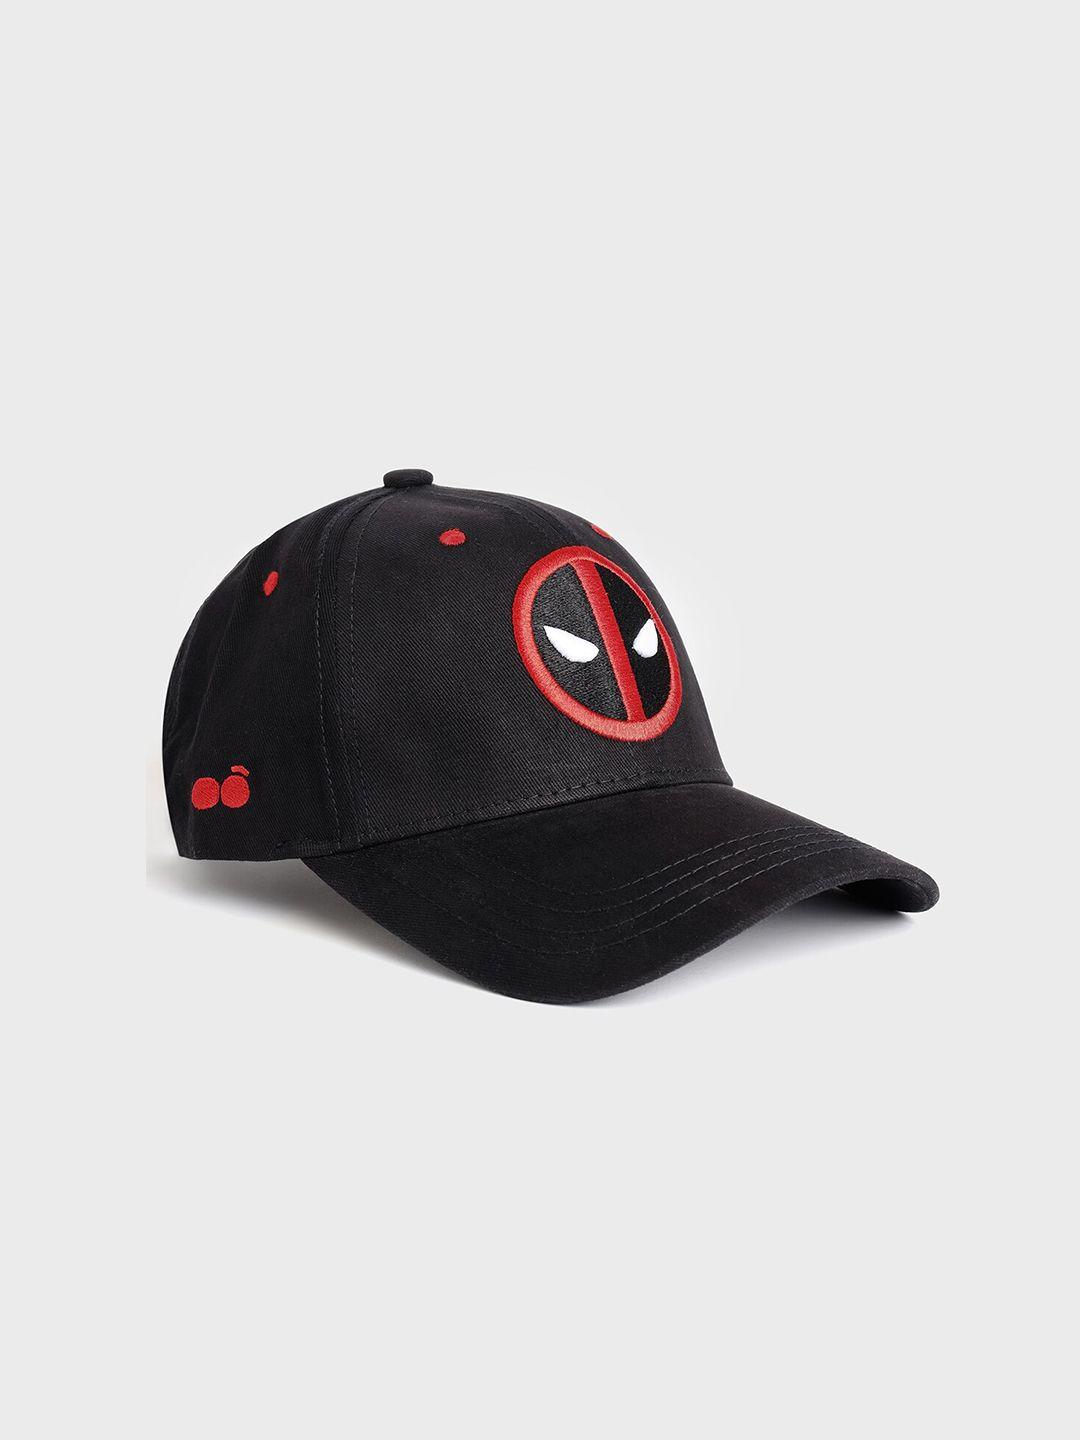 bewakoof unisex black & red deadpool printed baseball cap